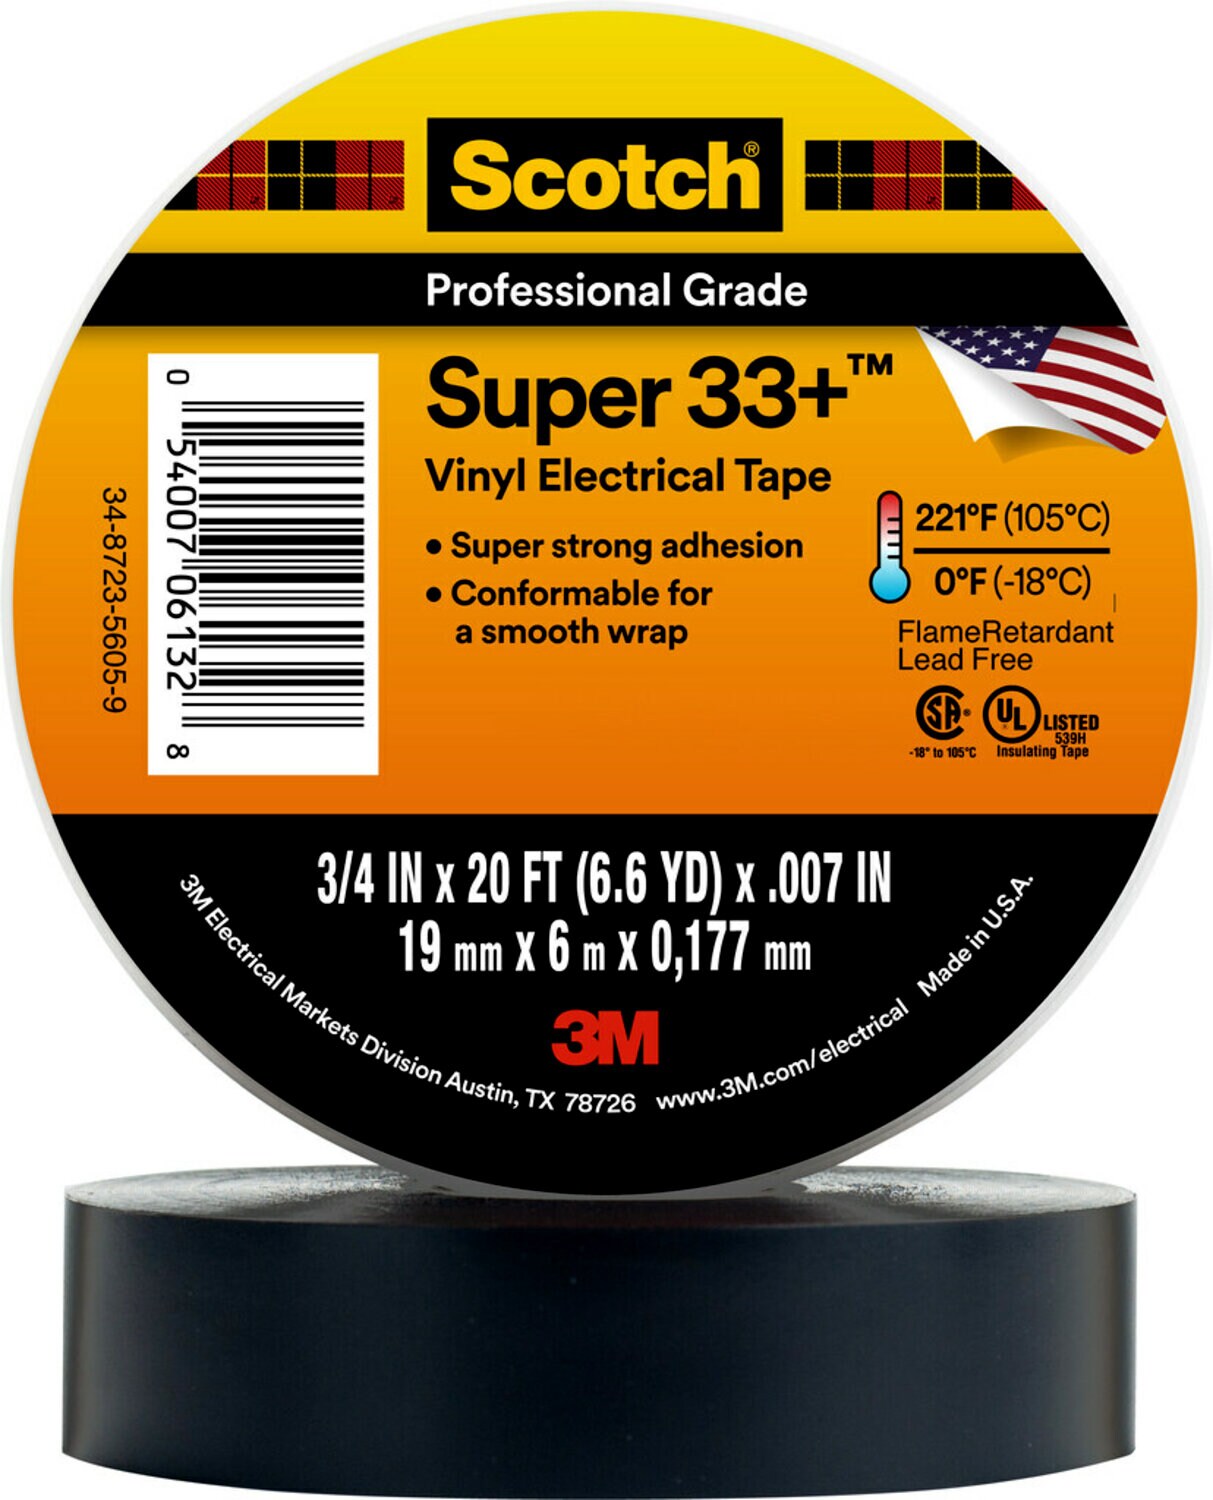 7000058432 - Scotch Super 33+ Vinyl Electrical Tape, 3/4 in x 20 ft, Black, 10
rolls/carton, 100 rolls/Case